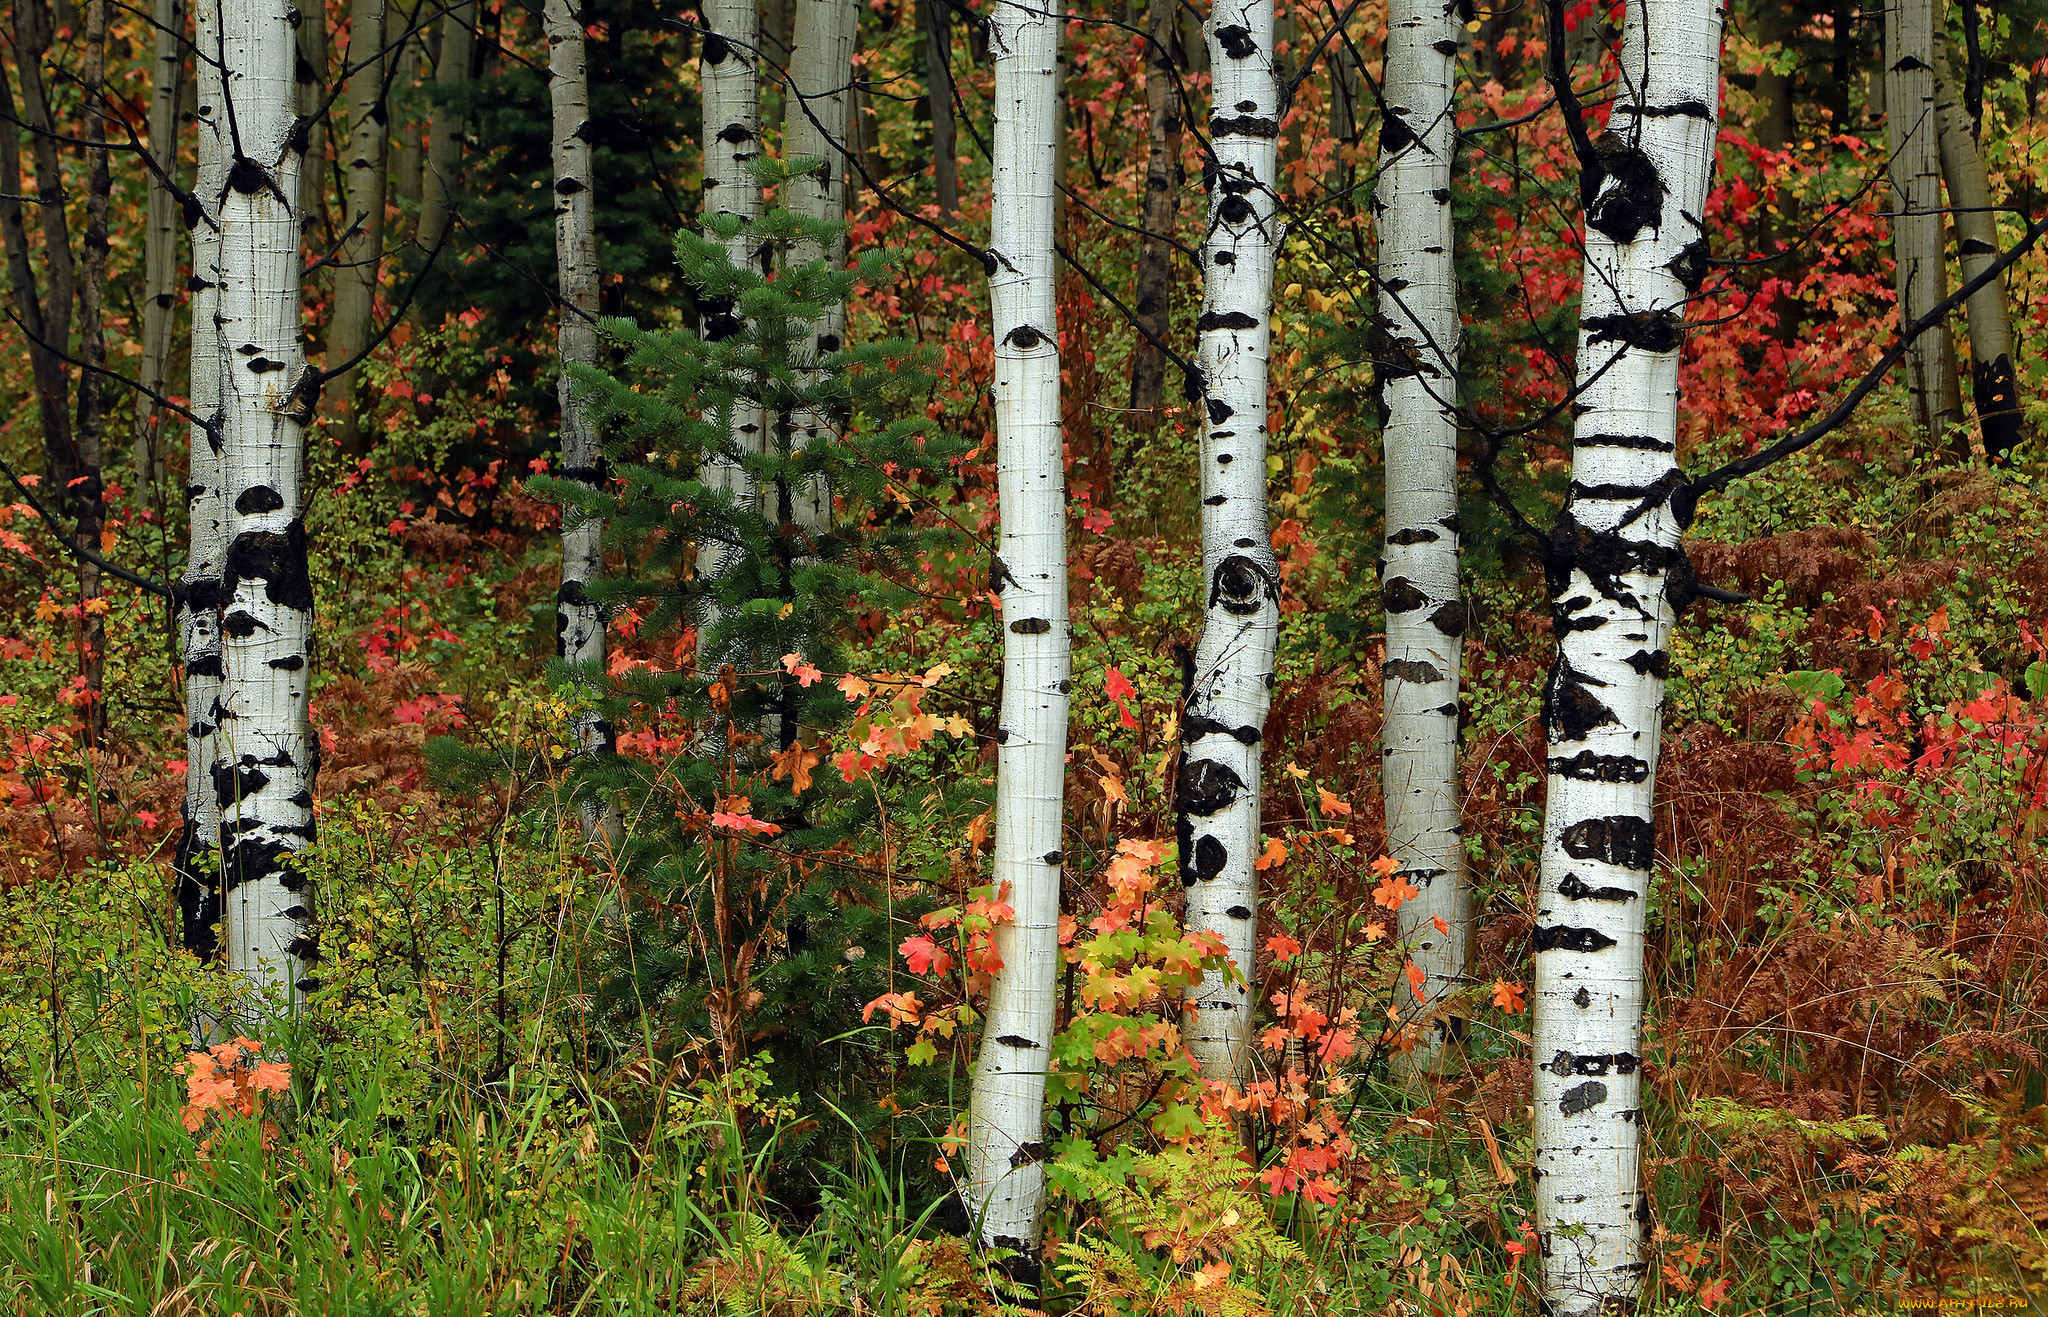 Панорама осеннего леса береза рябина ель